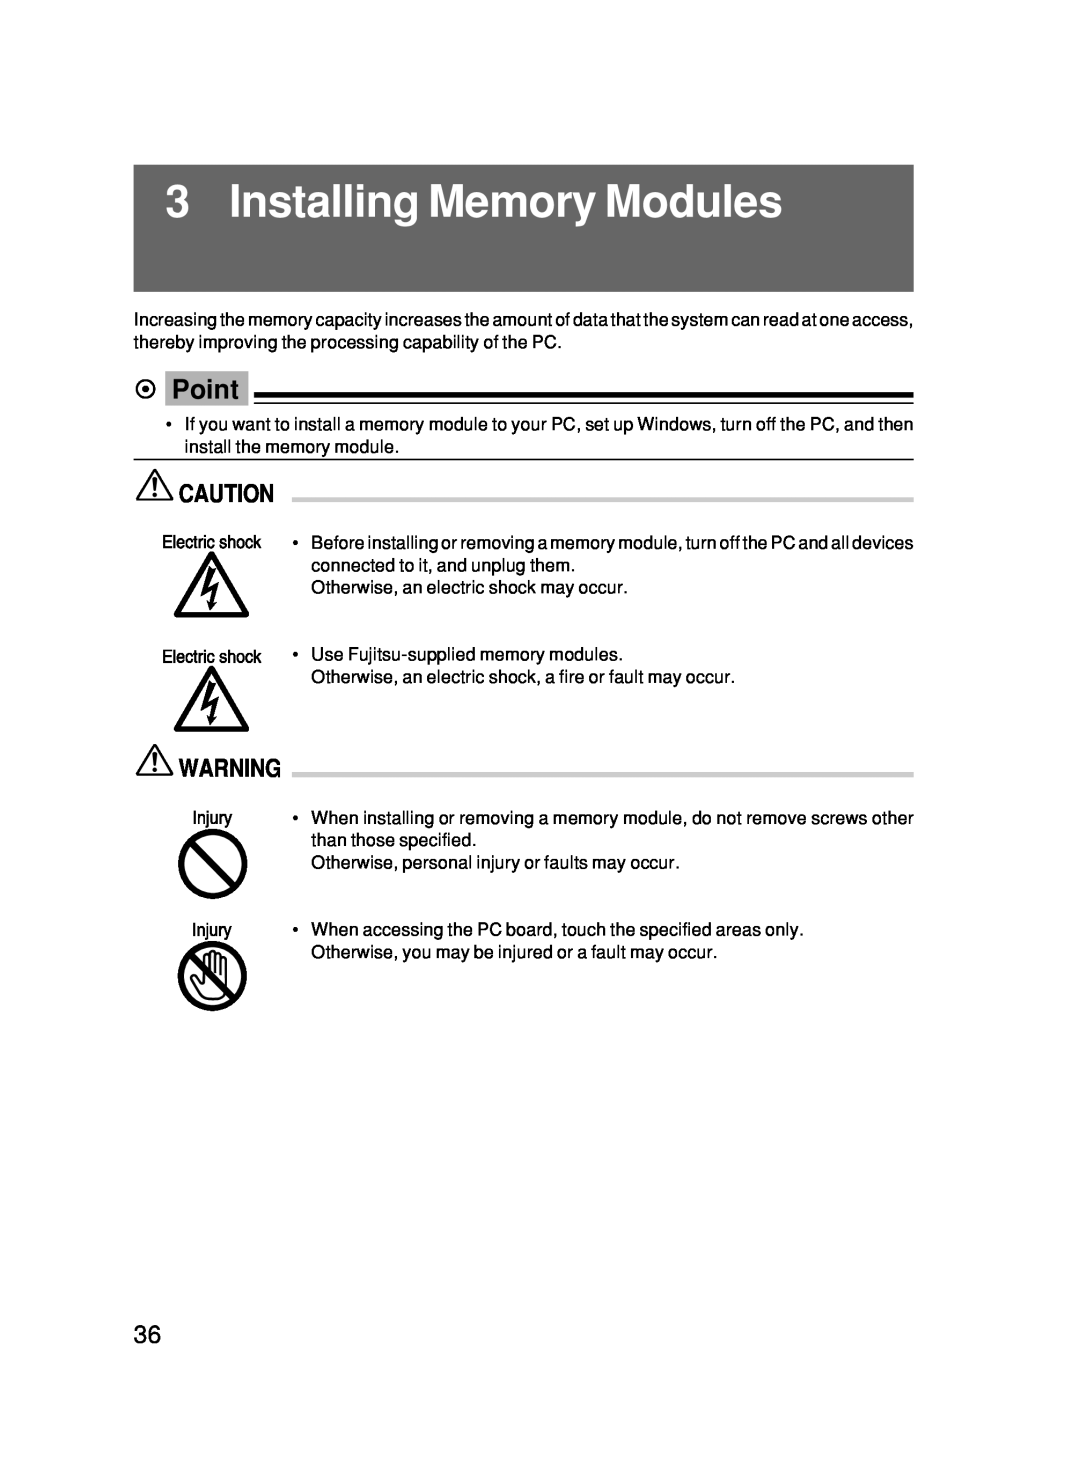 Fujitsu 500 user manual Installing Memory Modules, Point 